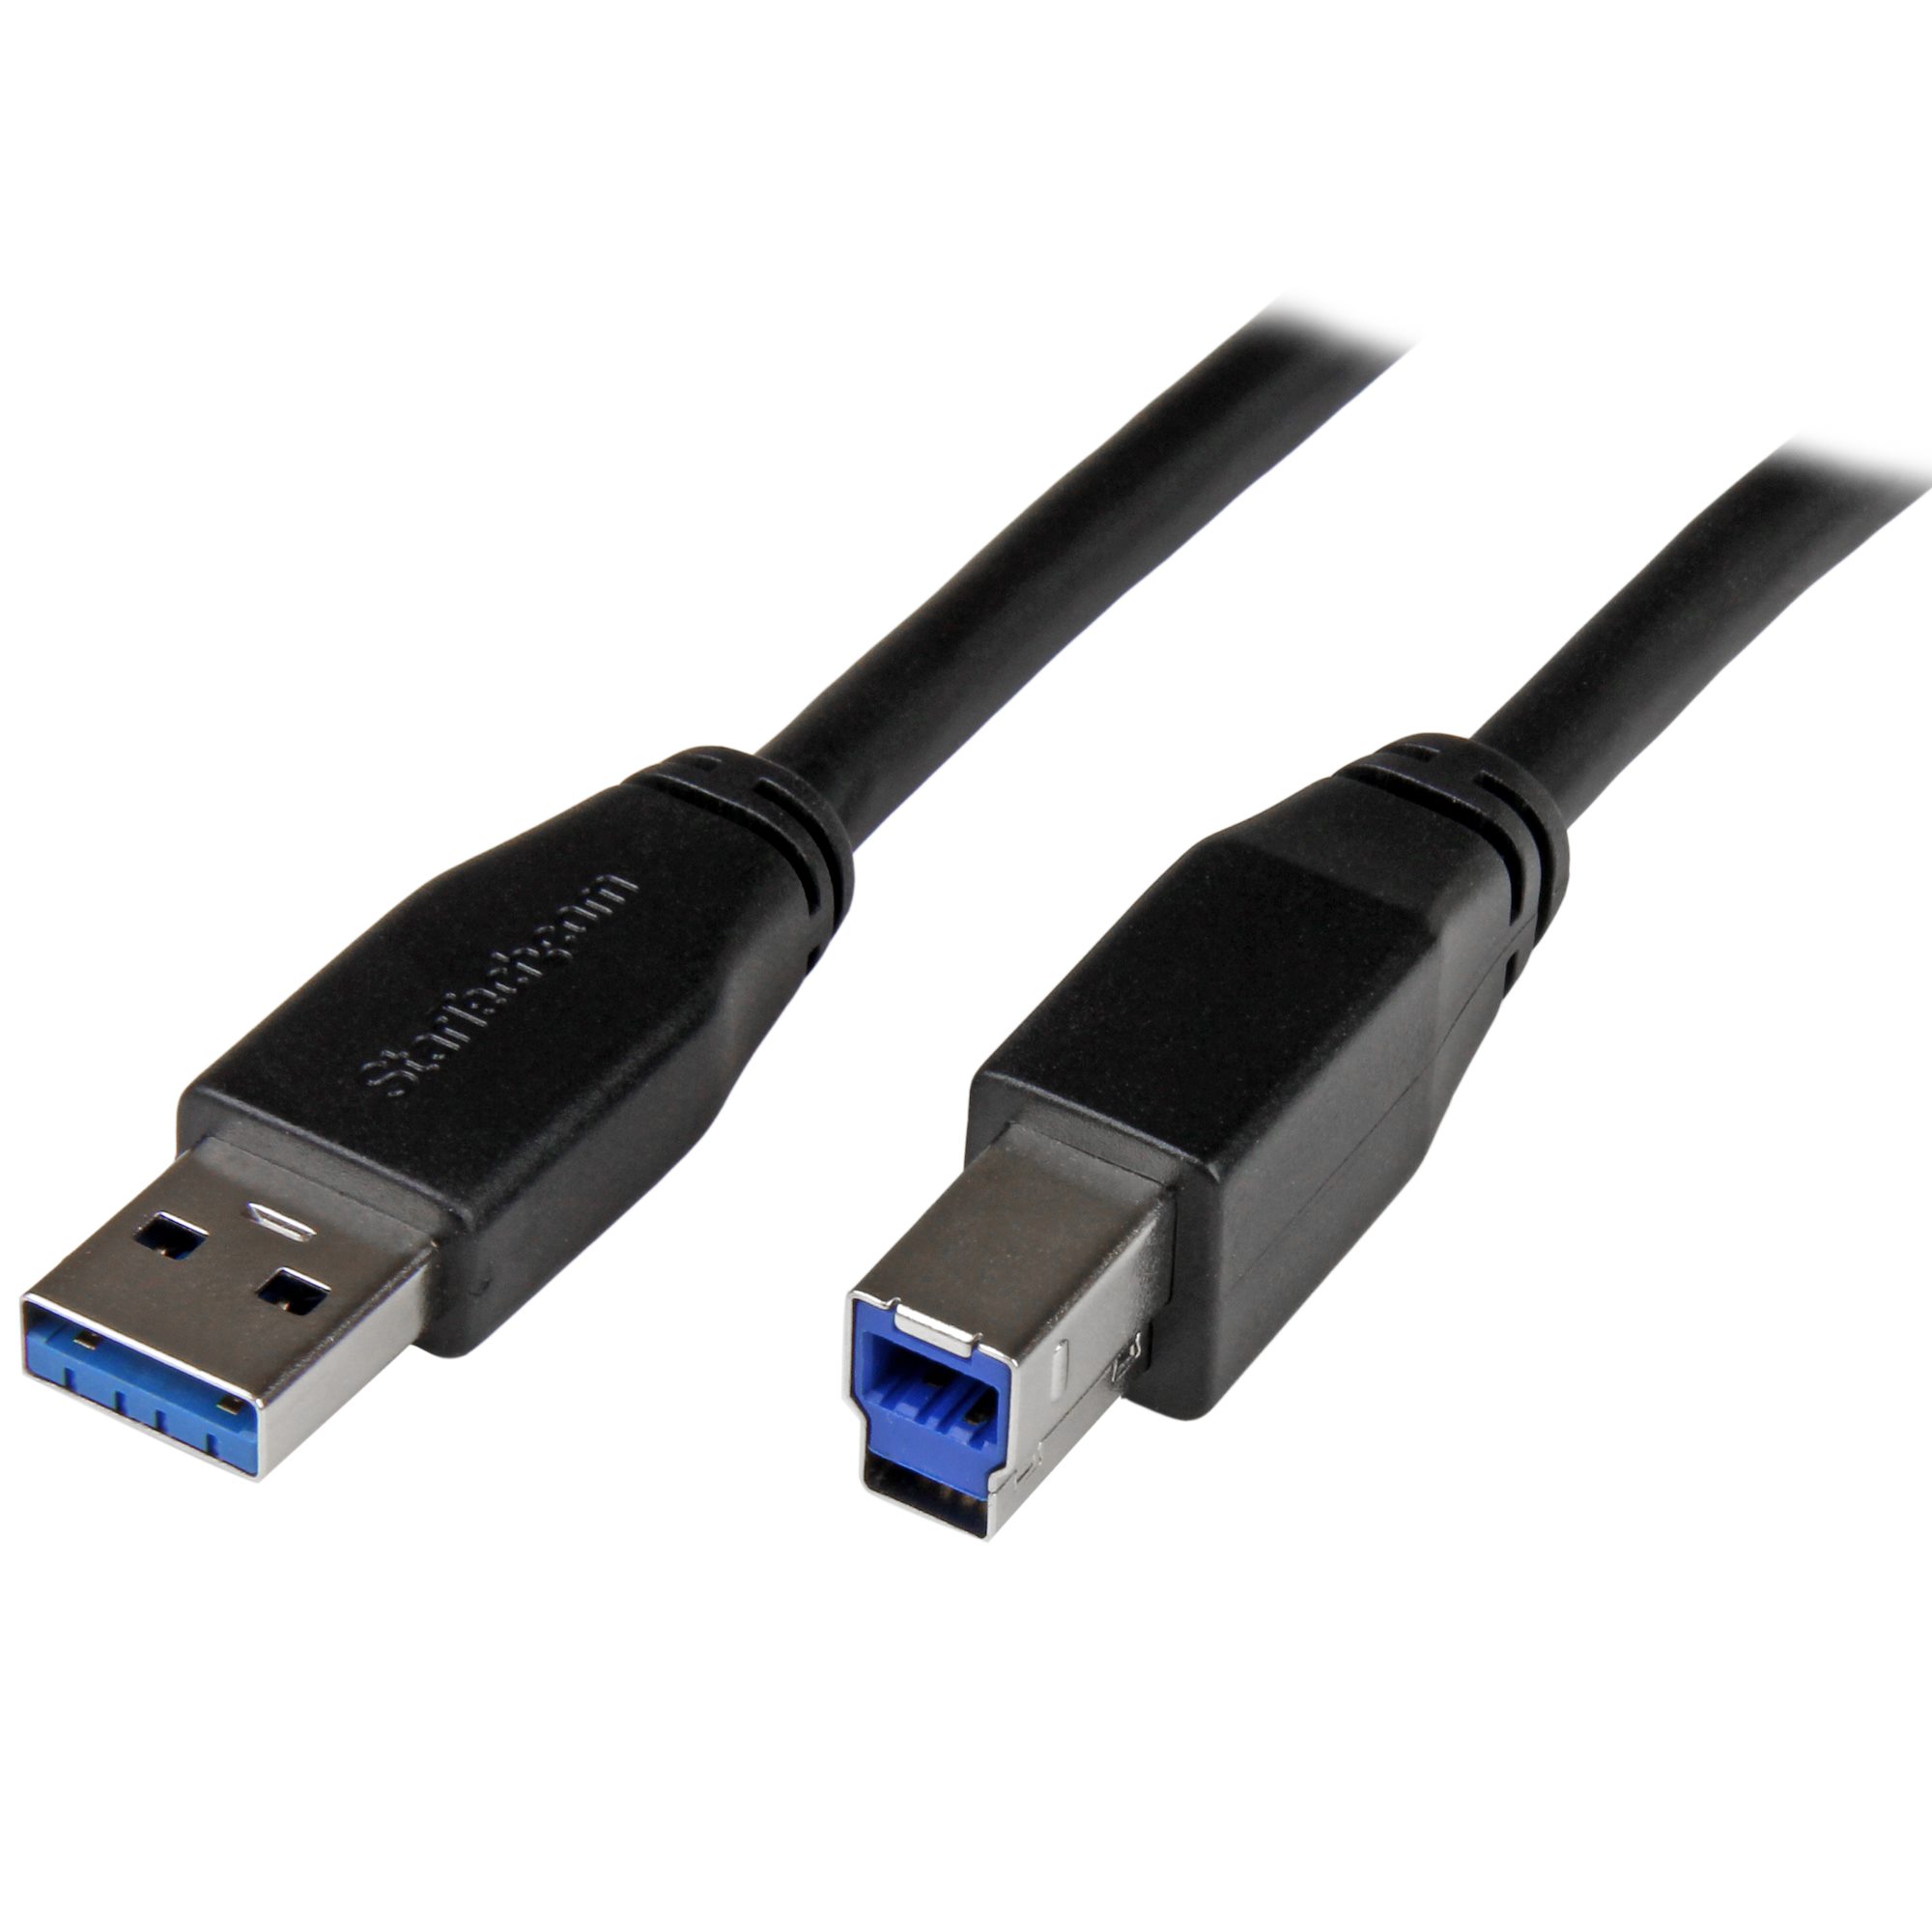 gek geworden zondaar Ploeg 15ft Active USB 3.0 USB-A to USB-B Cable - USB 3.0 Cables | StarTech.com